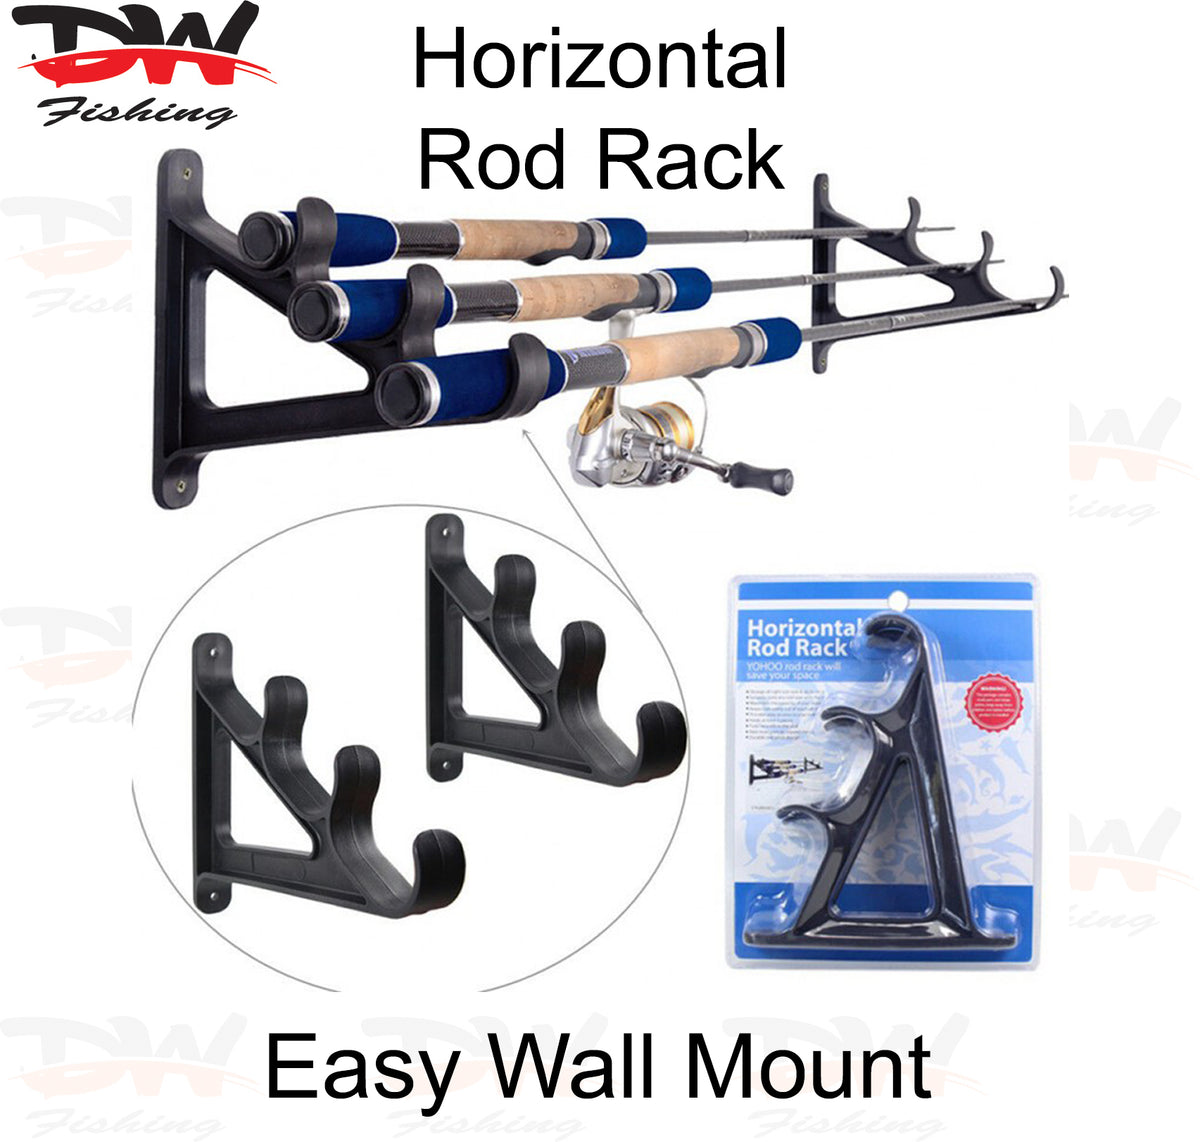 Horizontal Wall Mount Rod holder | Fishing Tackle | Dave's Tackle Bag